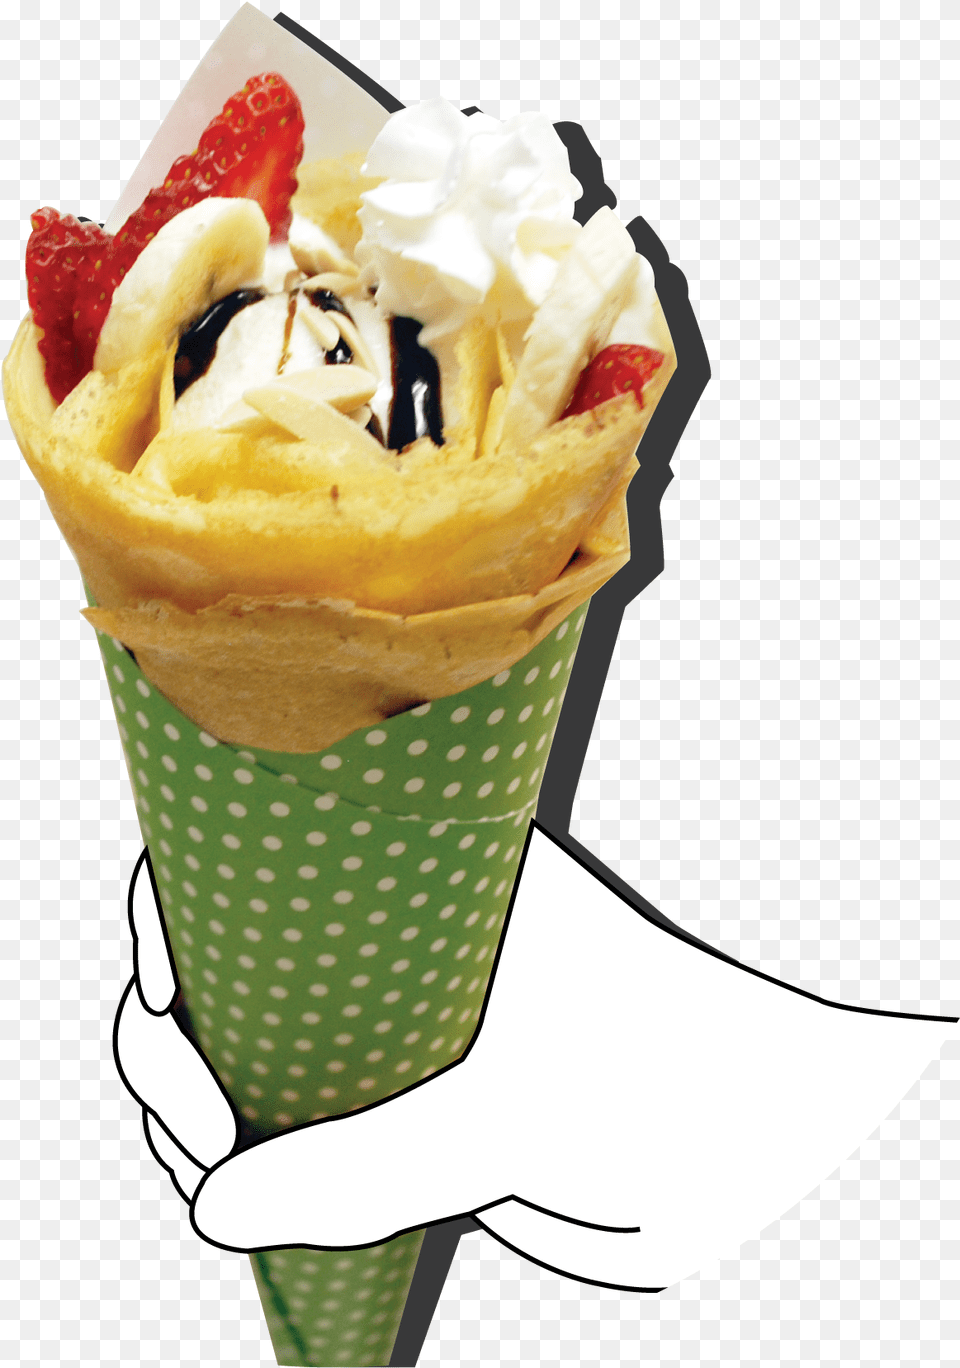 Pancakes Vector Dessert Crpe Ice Cream Hd, Food, Ice Cream, Soft Serve Ice Cream Png Image